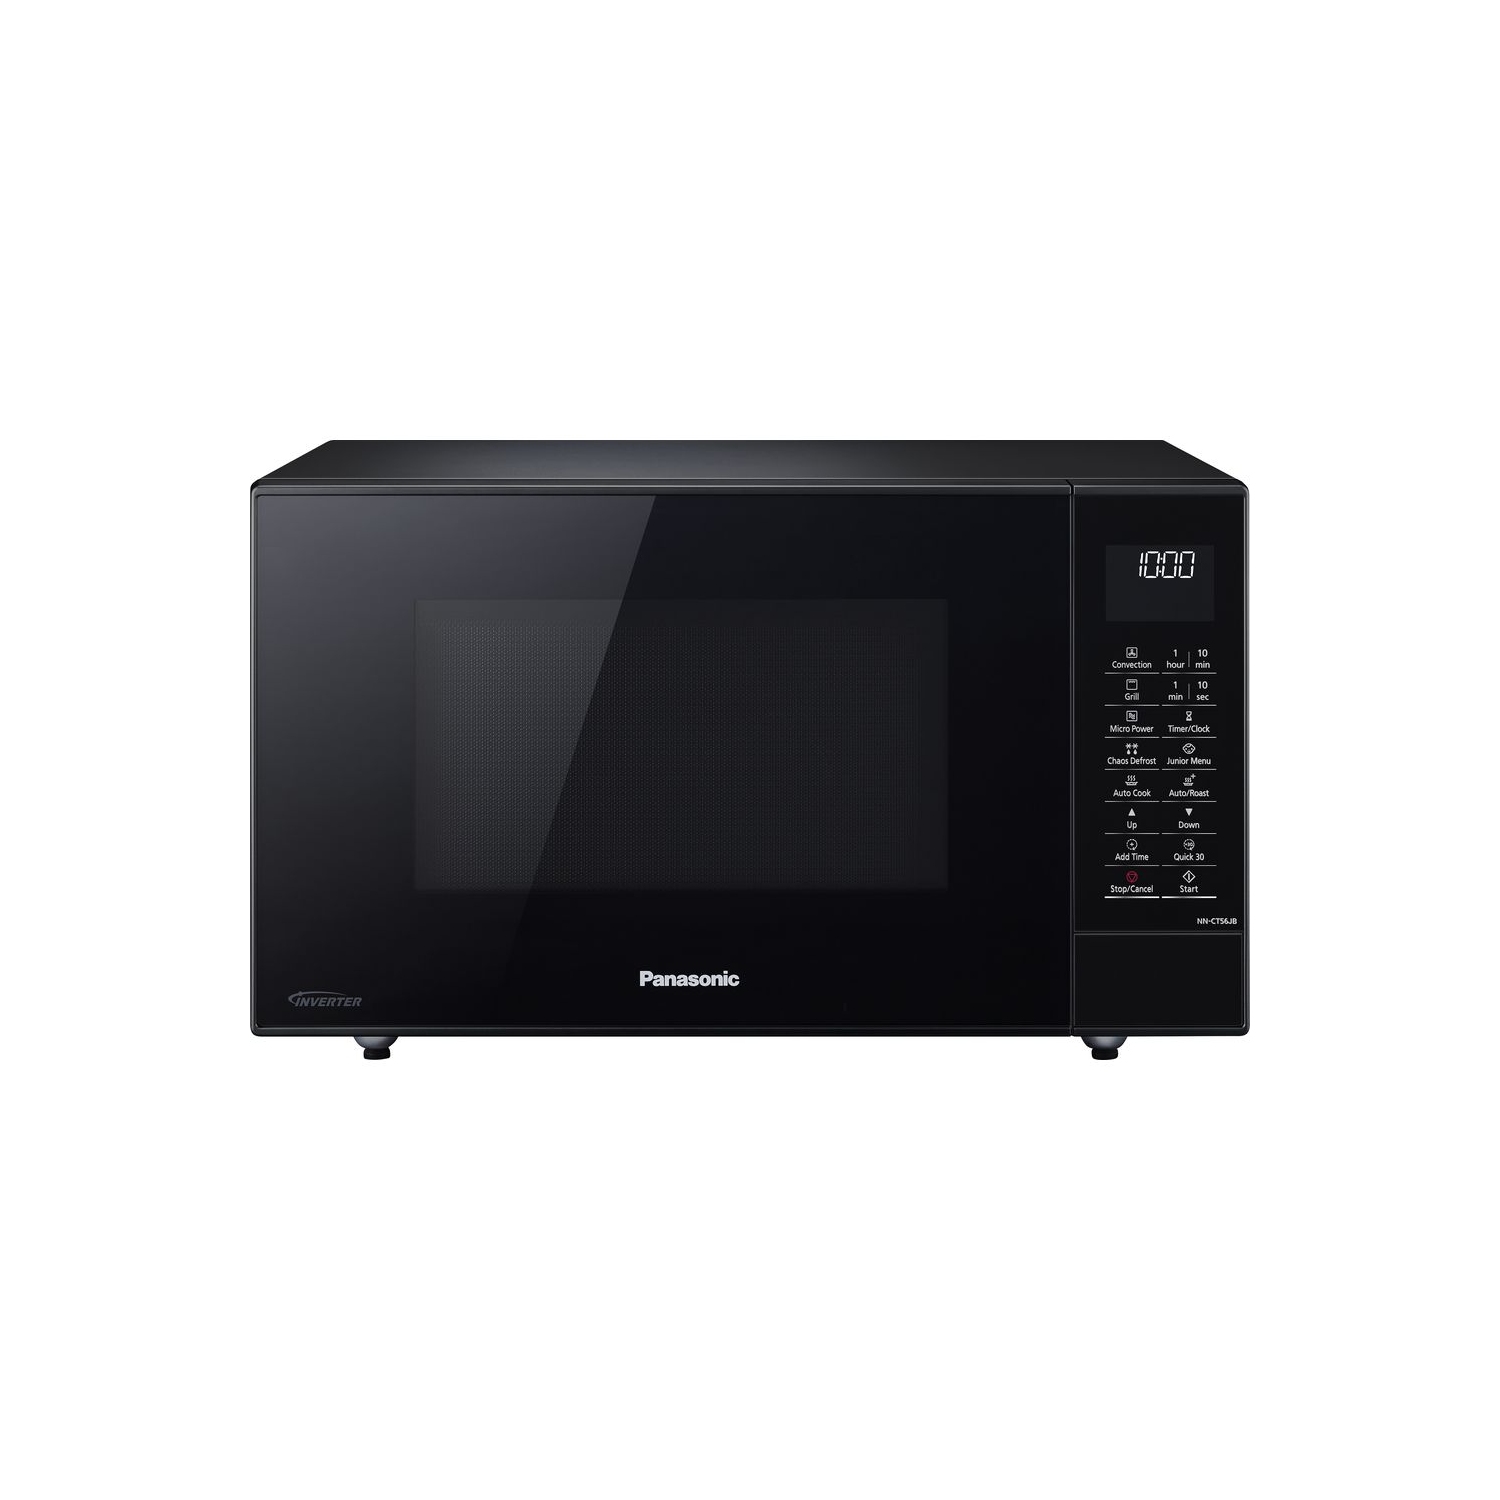 Panasonic 27 Ltr Slim Line Combi Microwave Oven (black) - 0